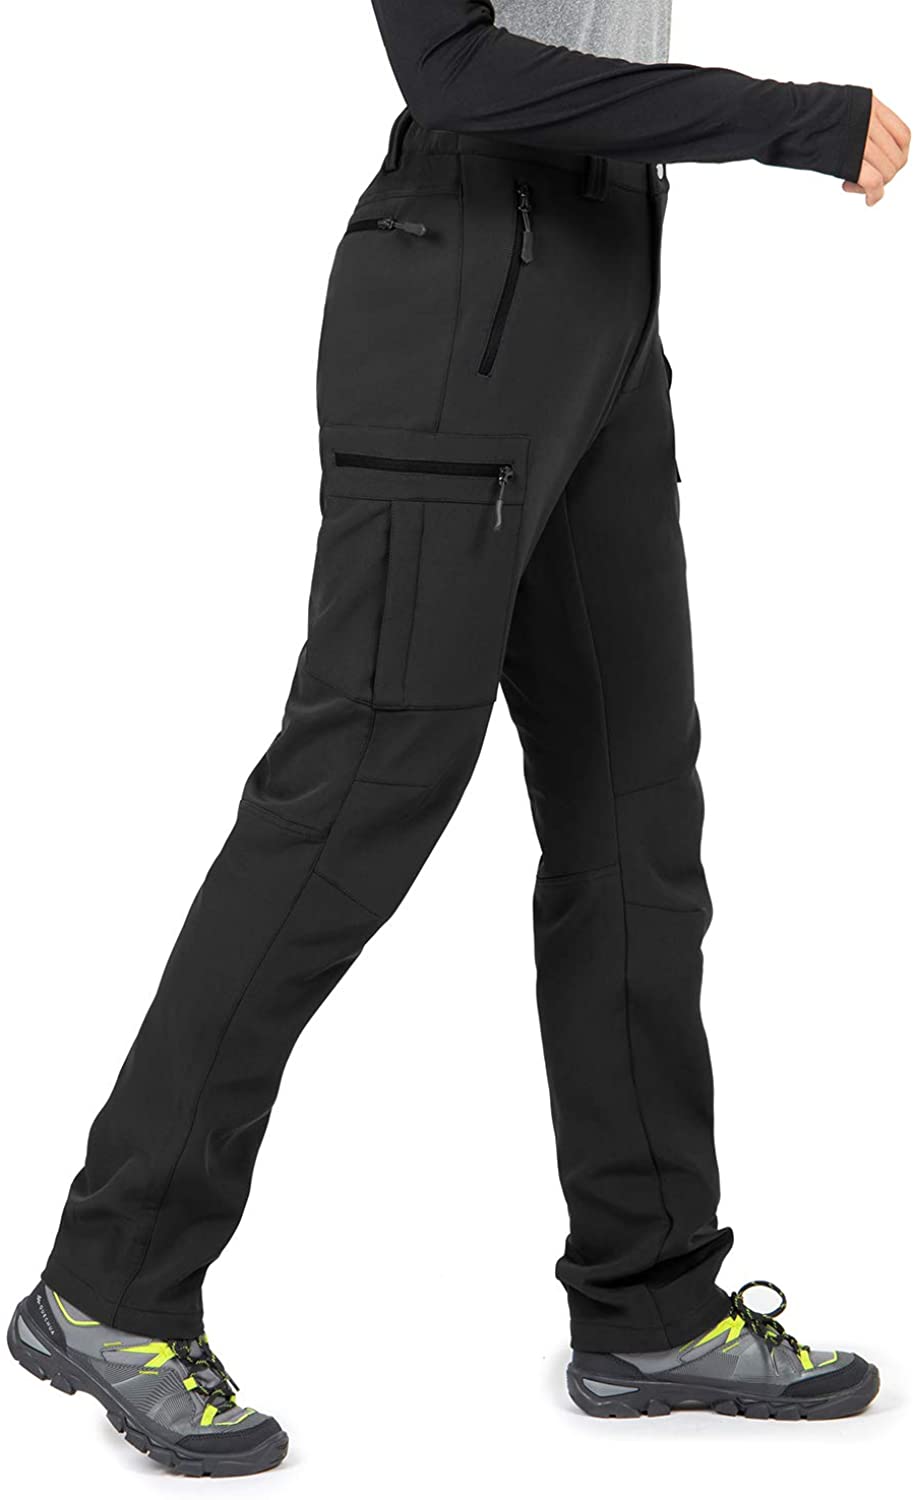 Waterproof Pants Fleece Lined Pants For Hiking Climbing Climbing Motorcycle  Ski